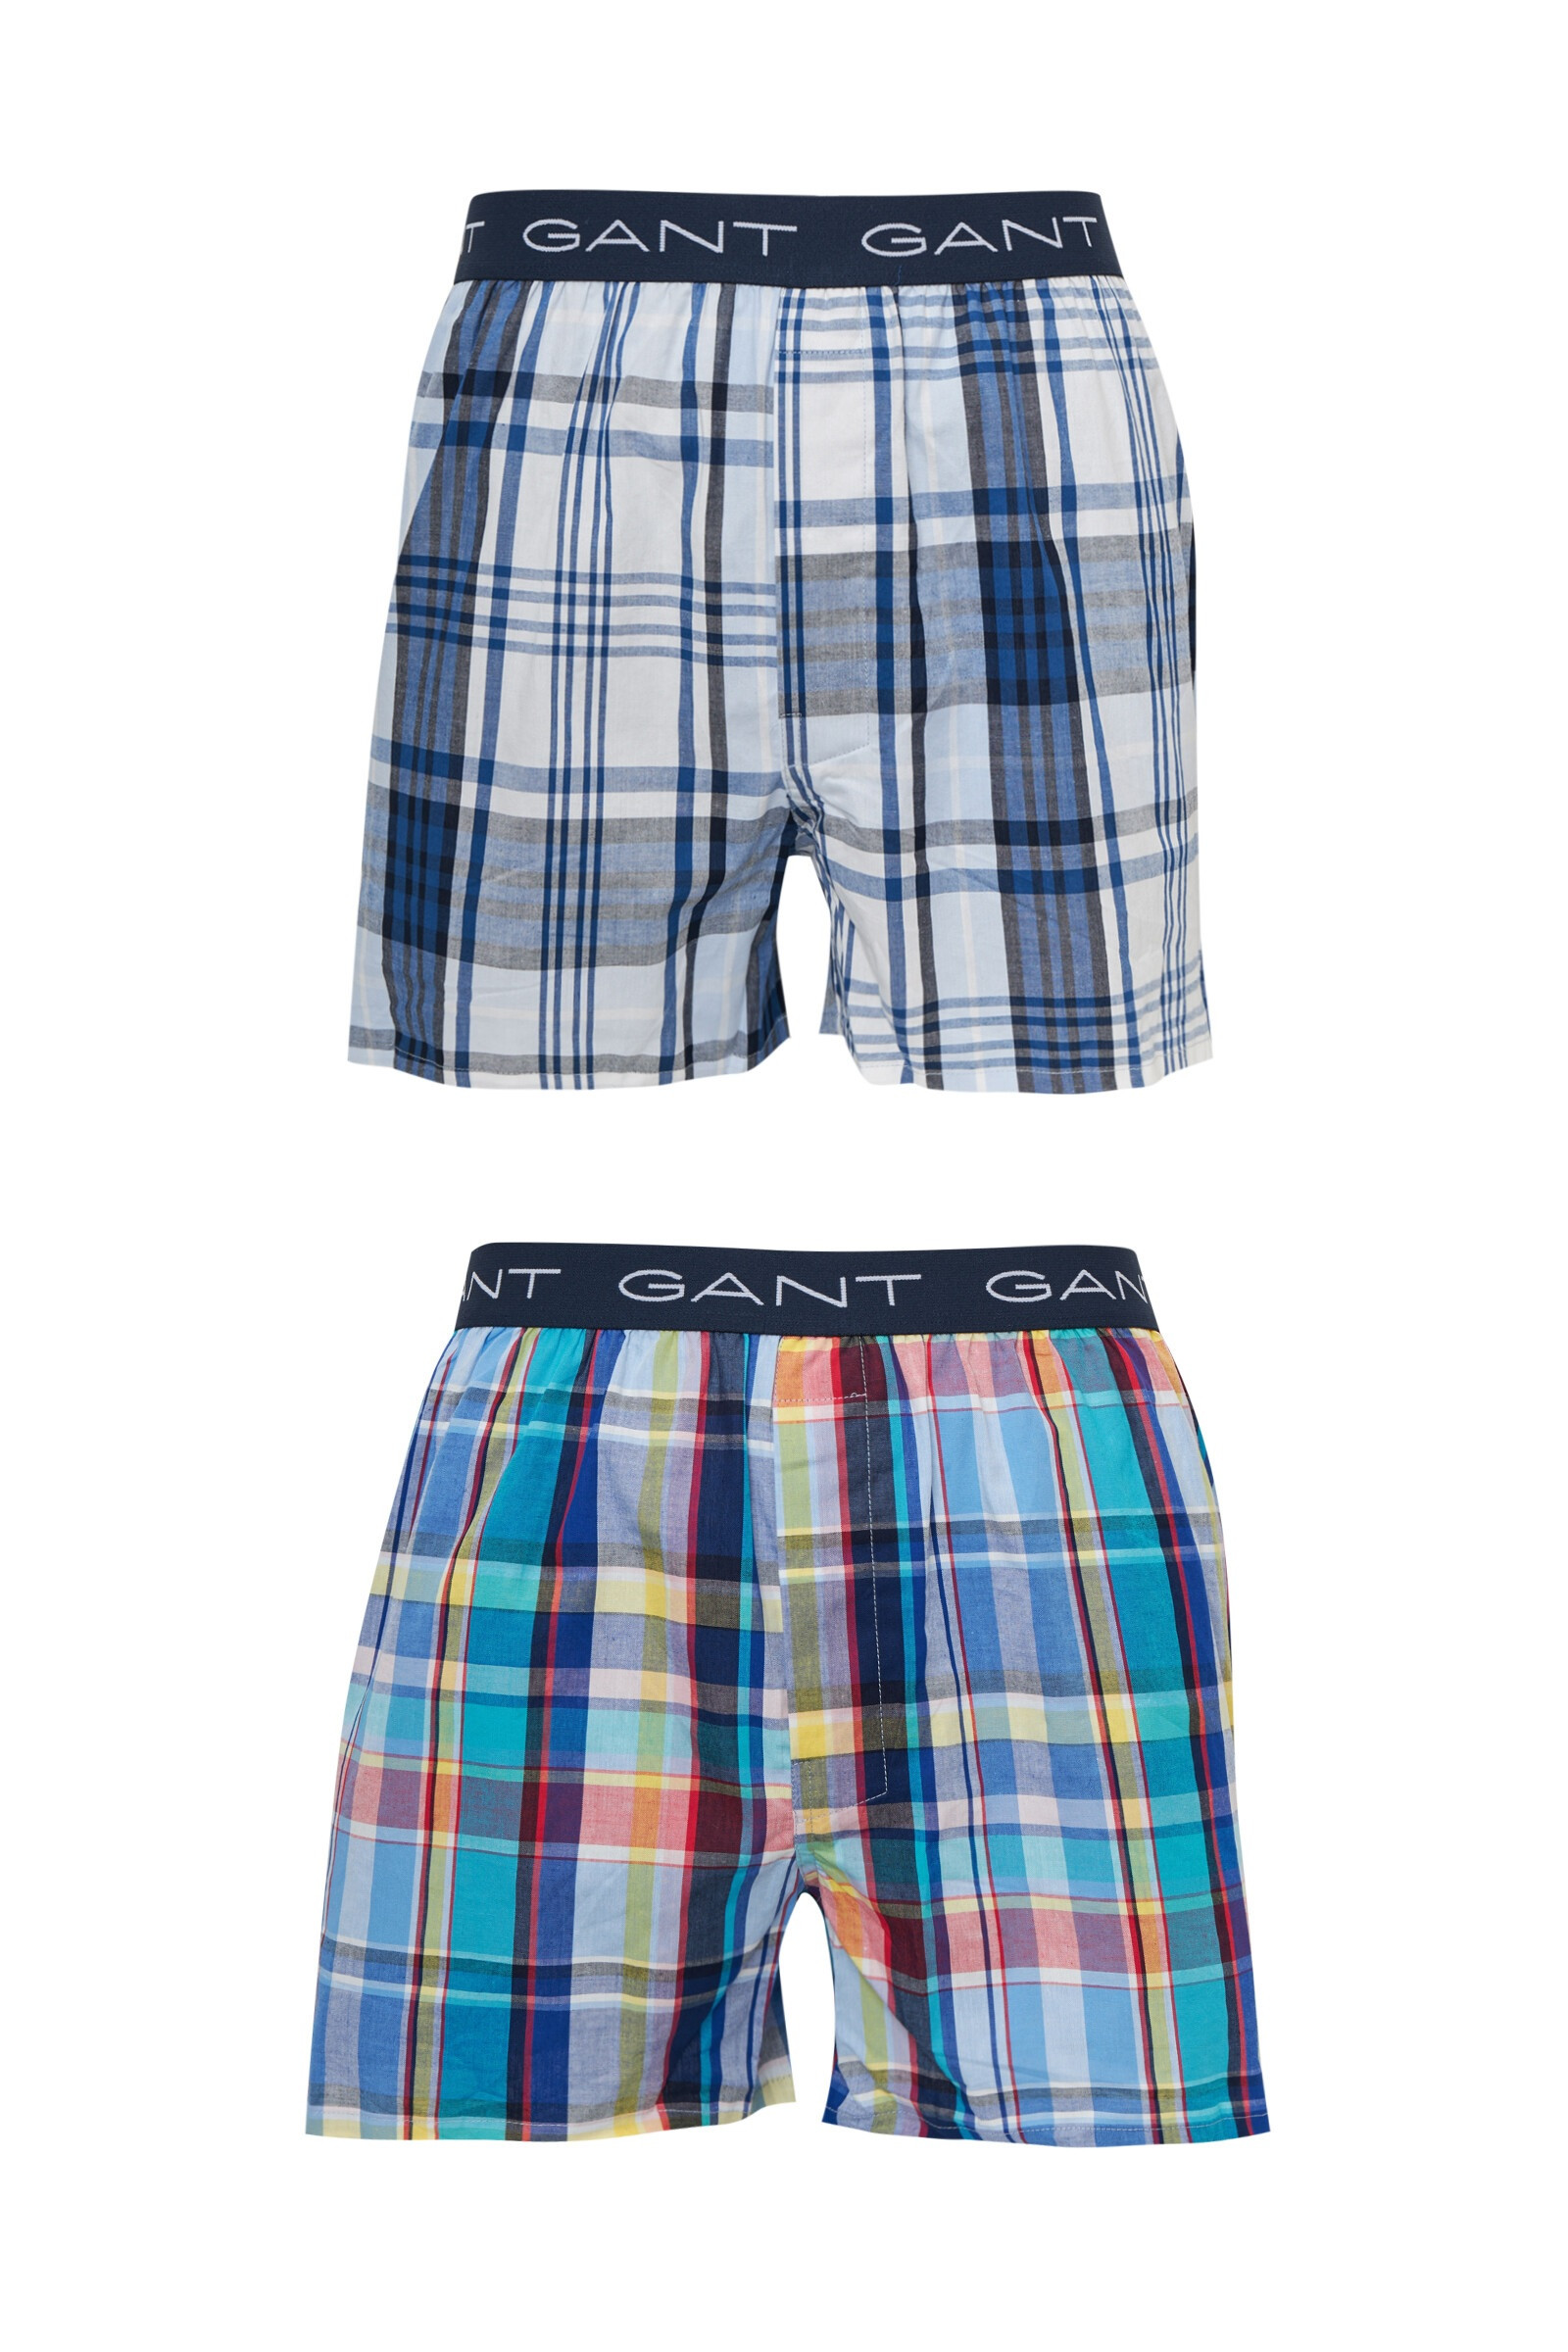 2PACK men's shorts Gant multicolored (902212229-420)